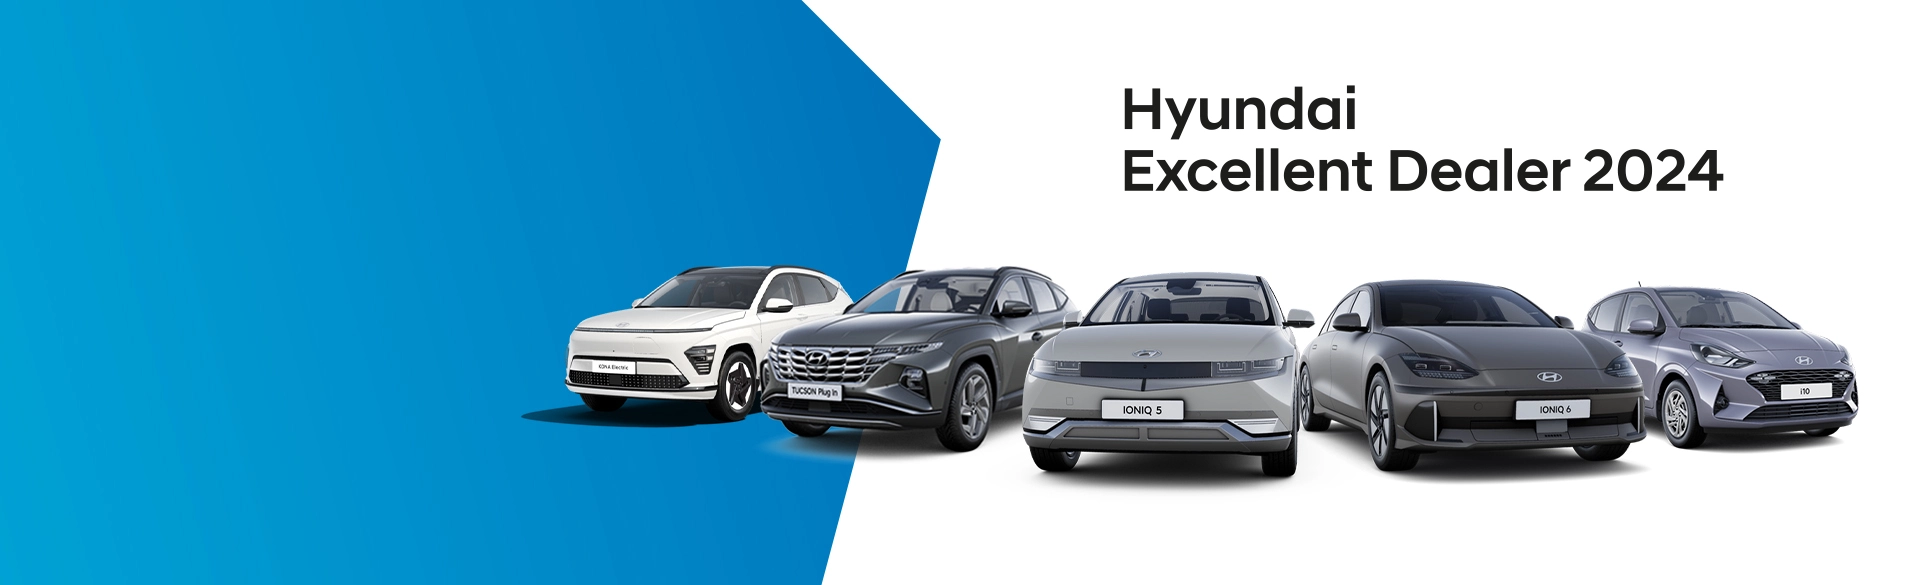 Hyundai Excellent Dealer 2024